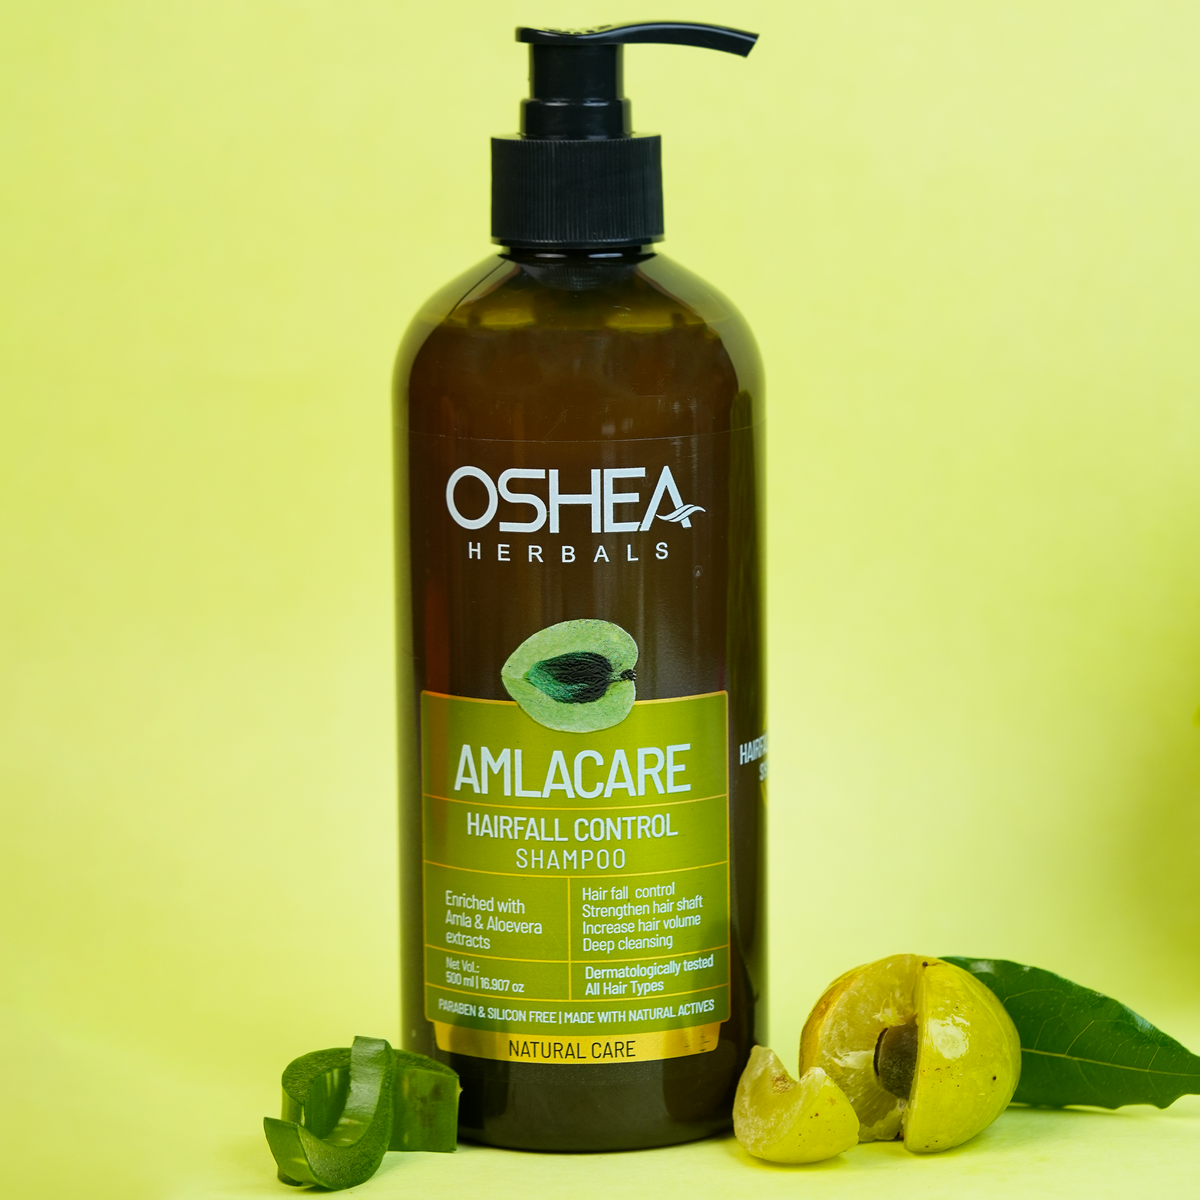 AmlaCare Hairfall control Shampoo Oshea Herbals